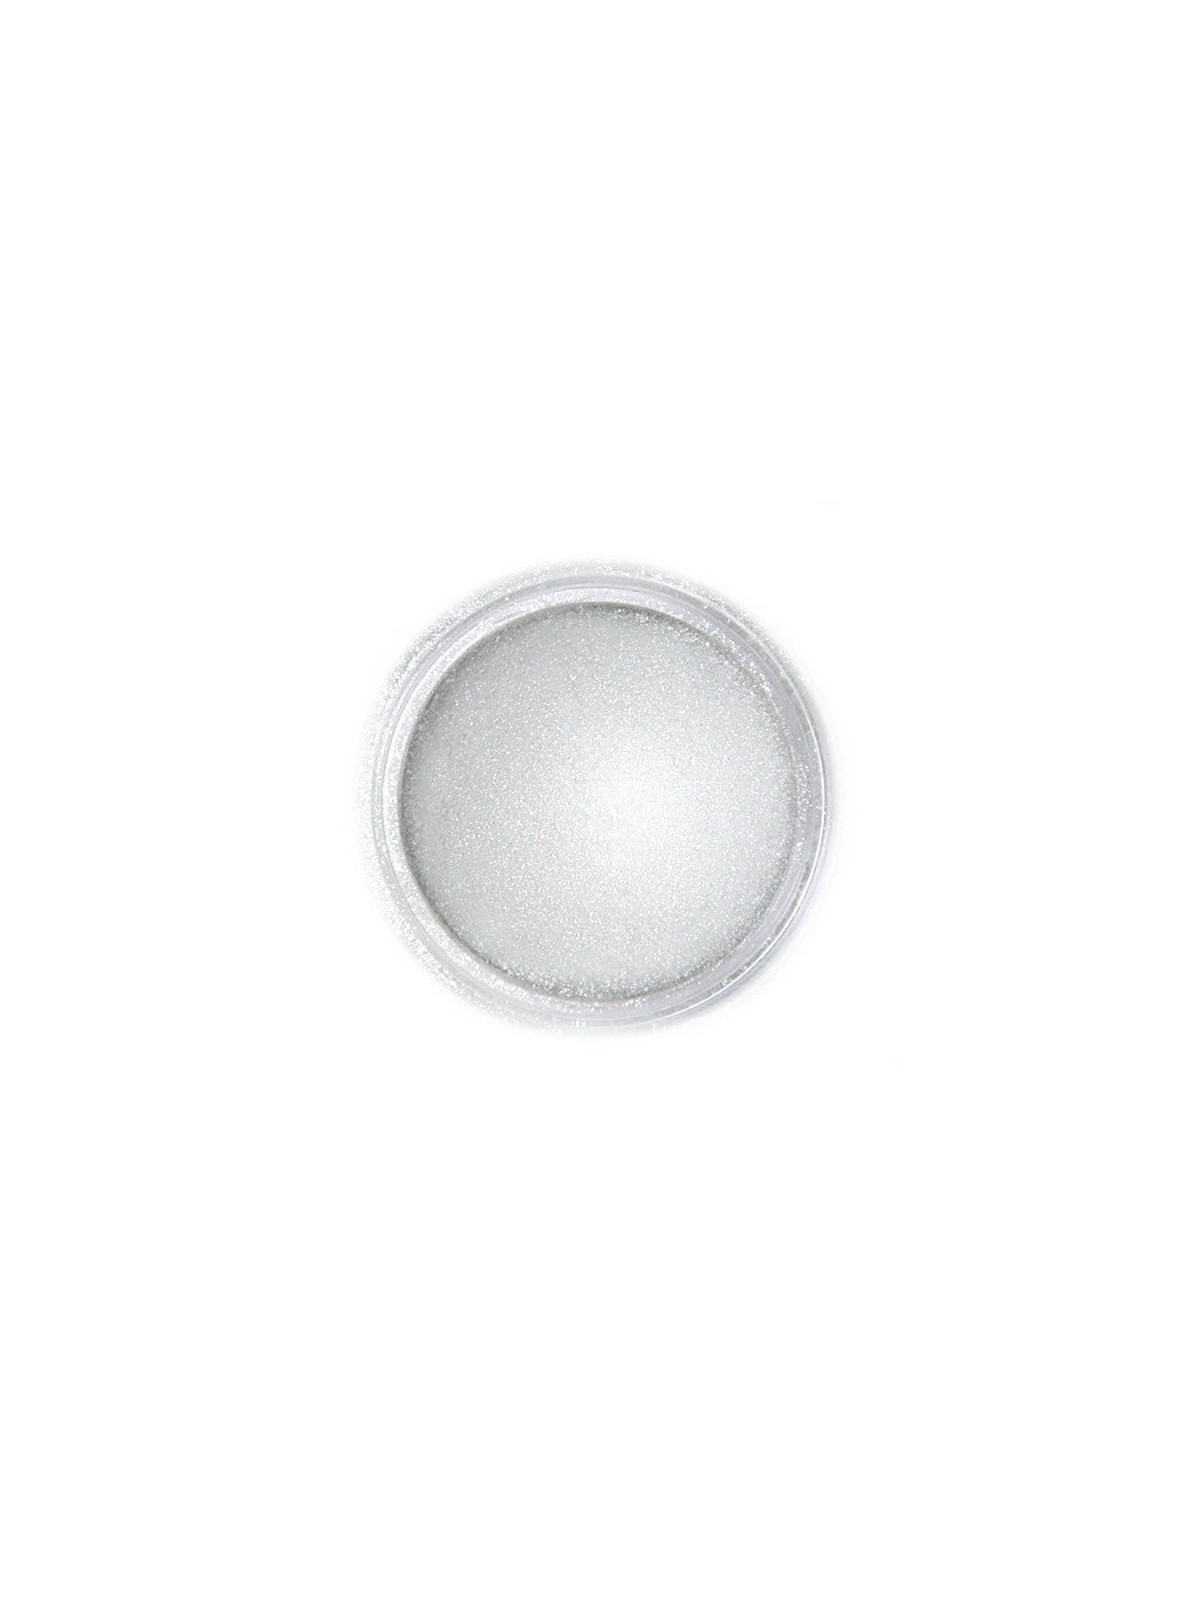 Essbare Staub perl Fractal - Light Silver, Világos metál ezüst (3 g)